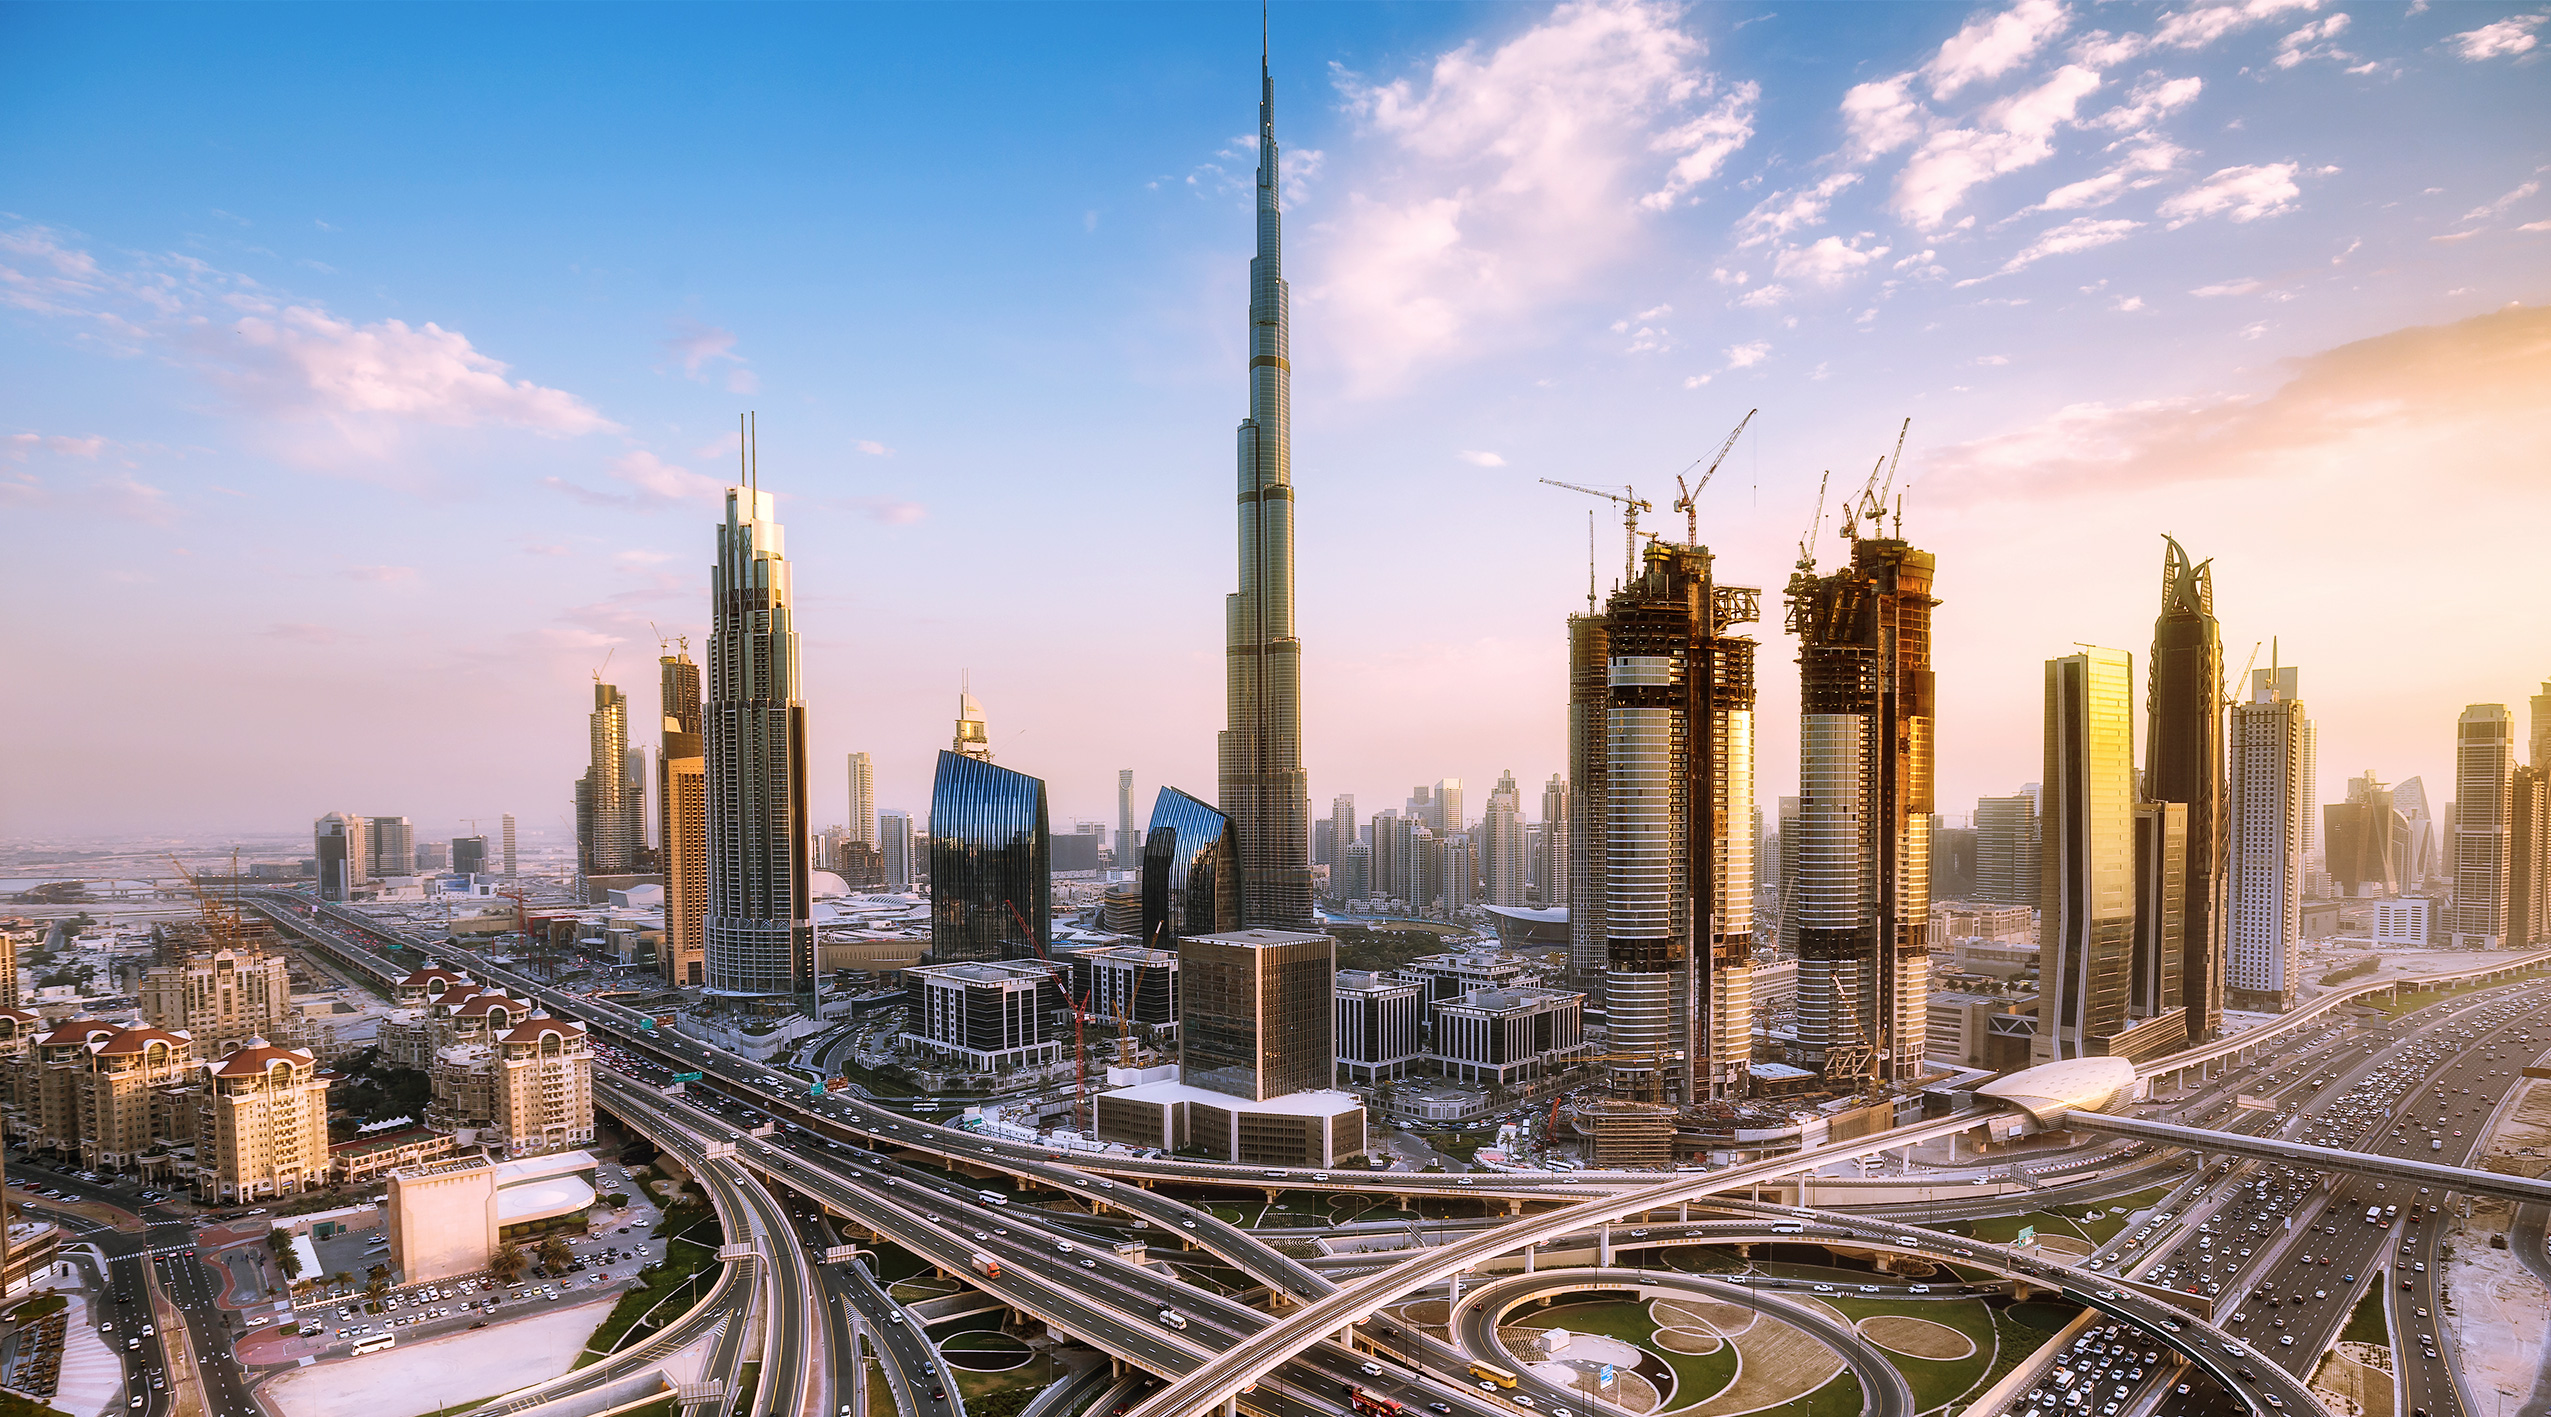 View of Burj Khalifa in Dubai, Middle East